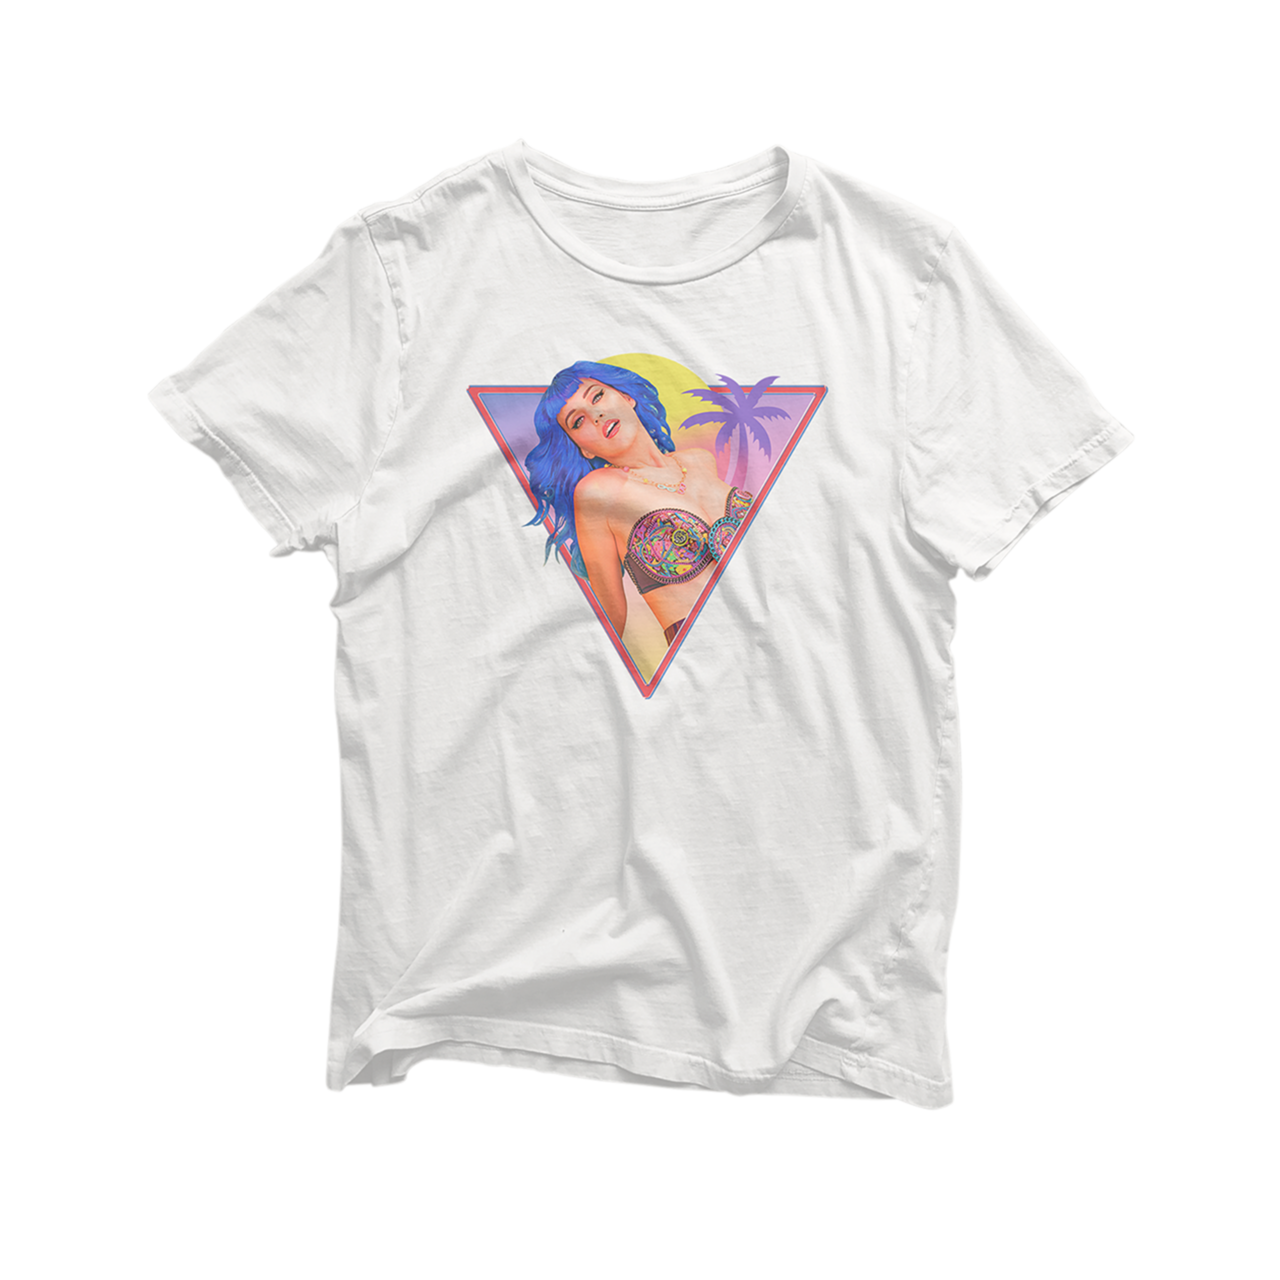 Katy Perry - California Gurls T -Shirt